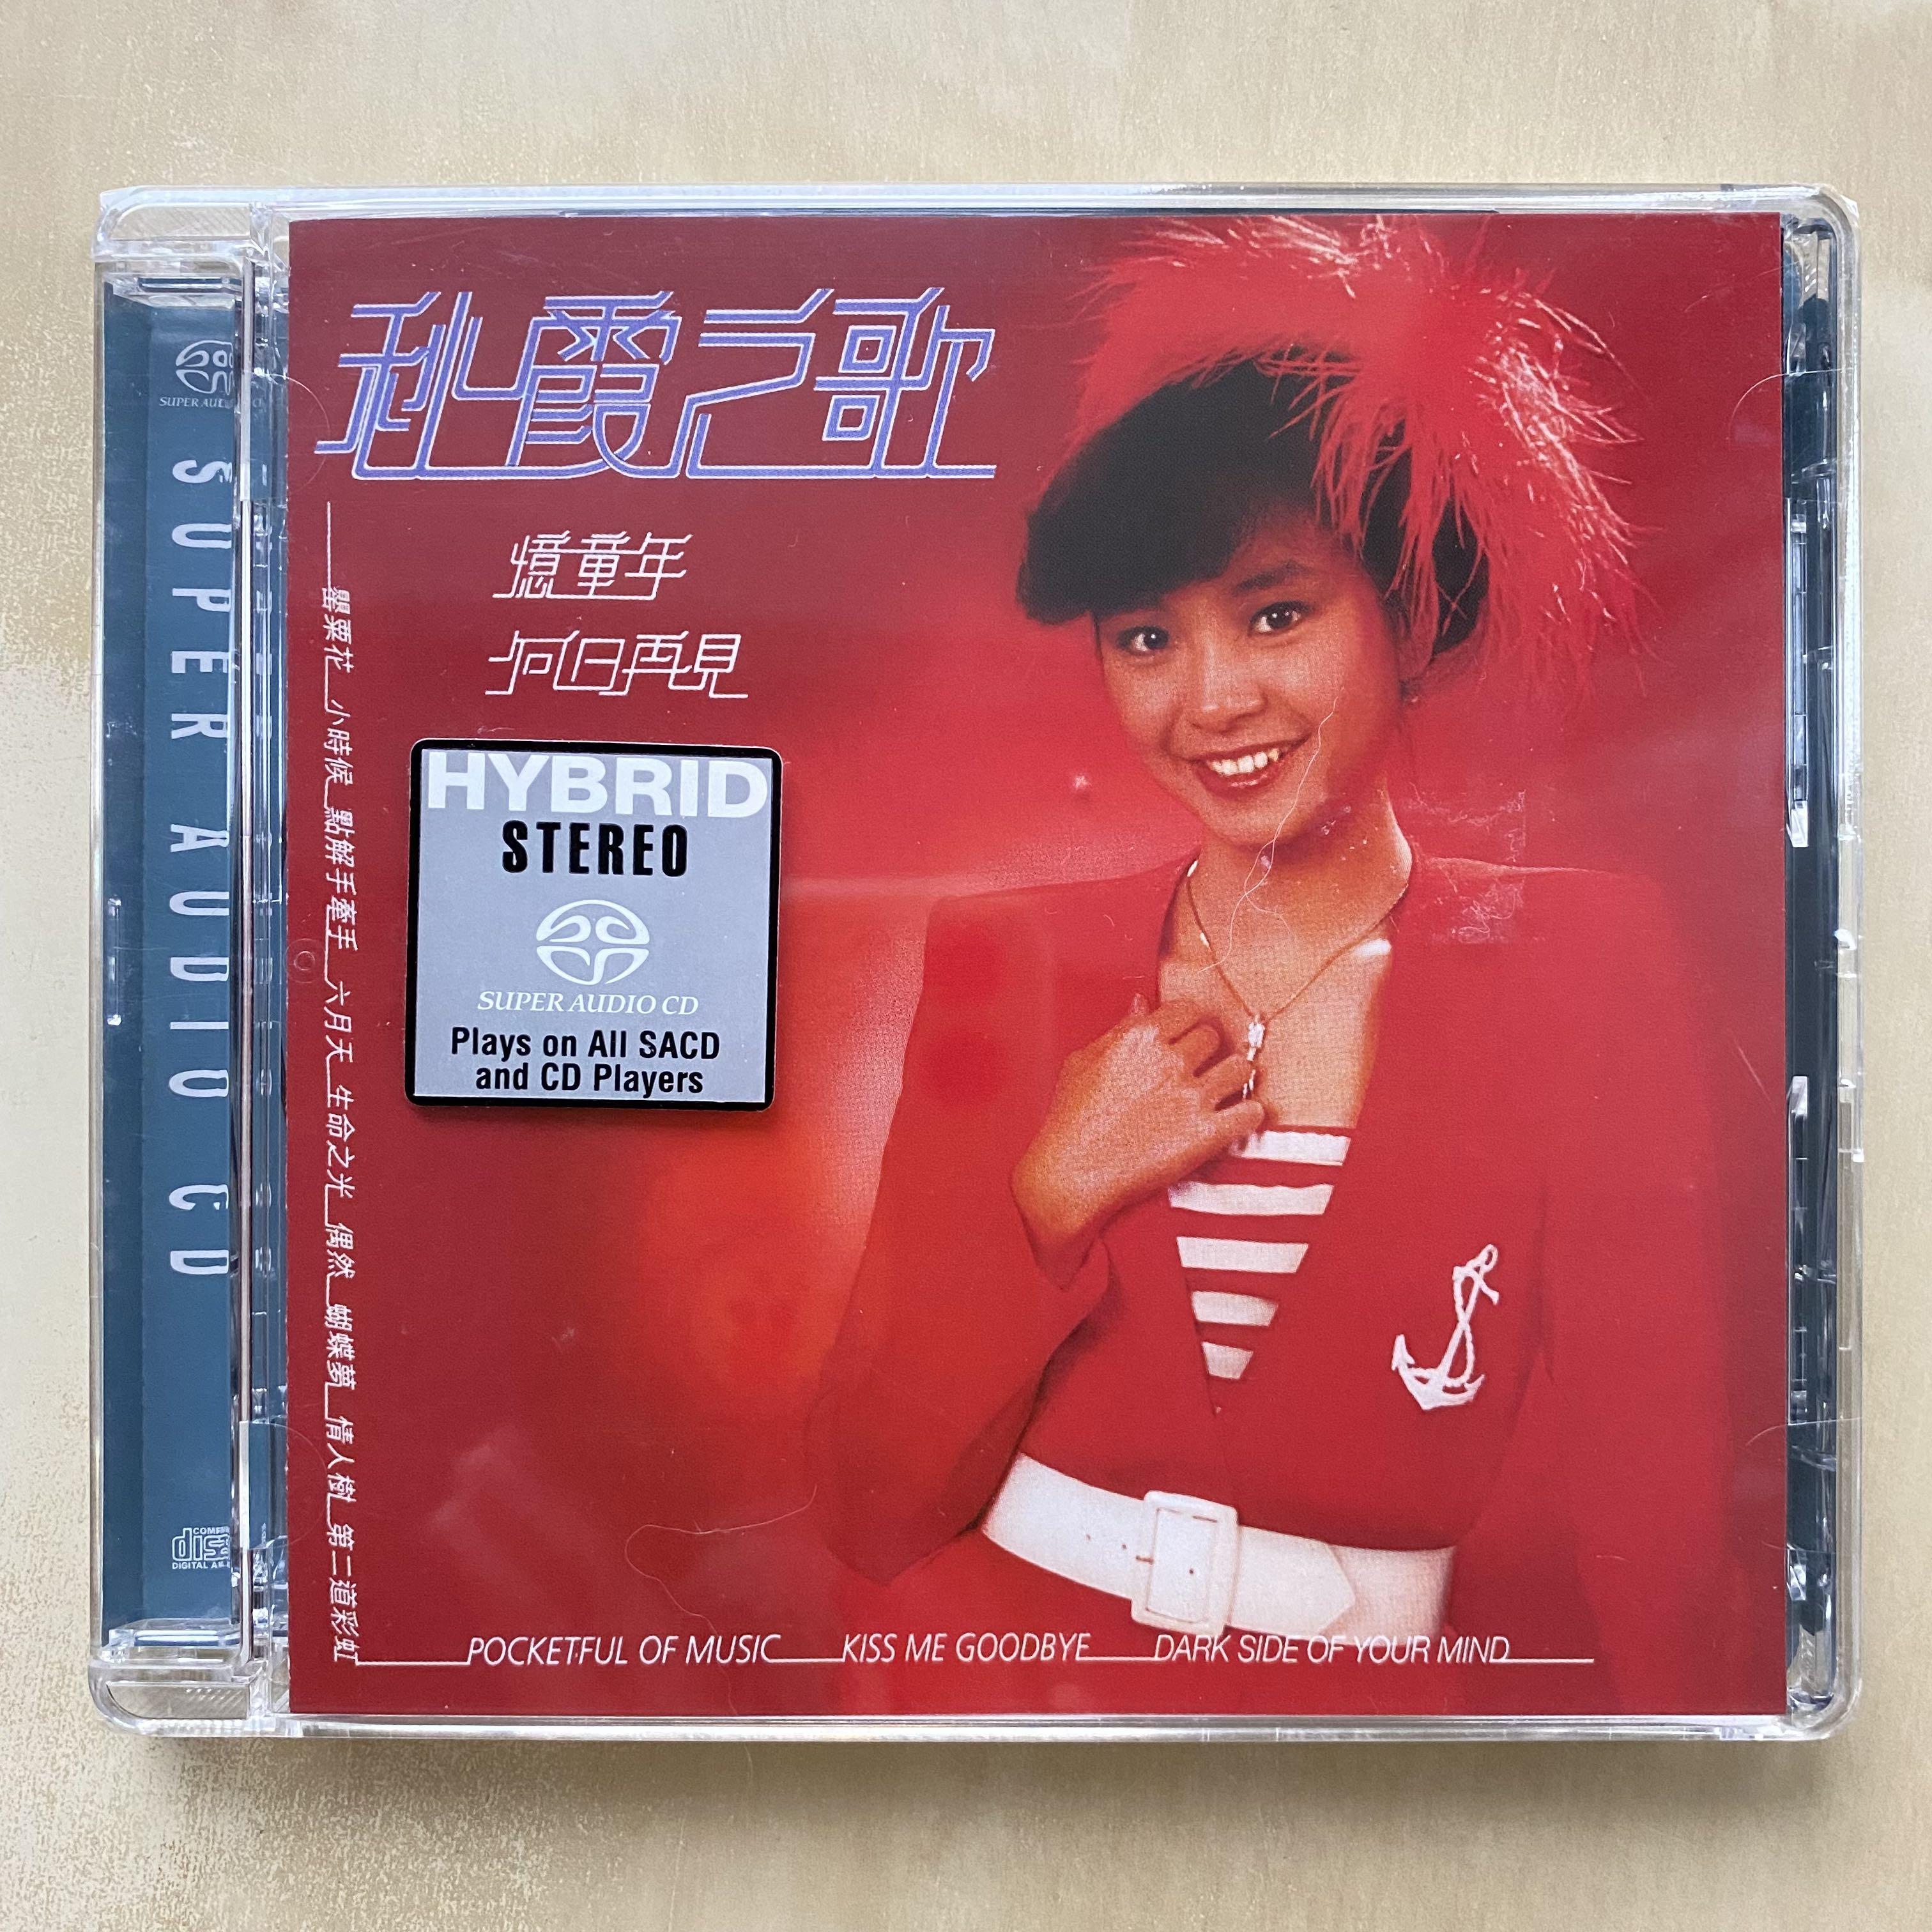 CD丨陳秋霞秋霞之歌/ Chelsia Chan Chelsia's Songs (SACD) 日本壓制 